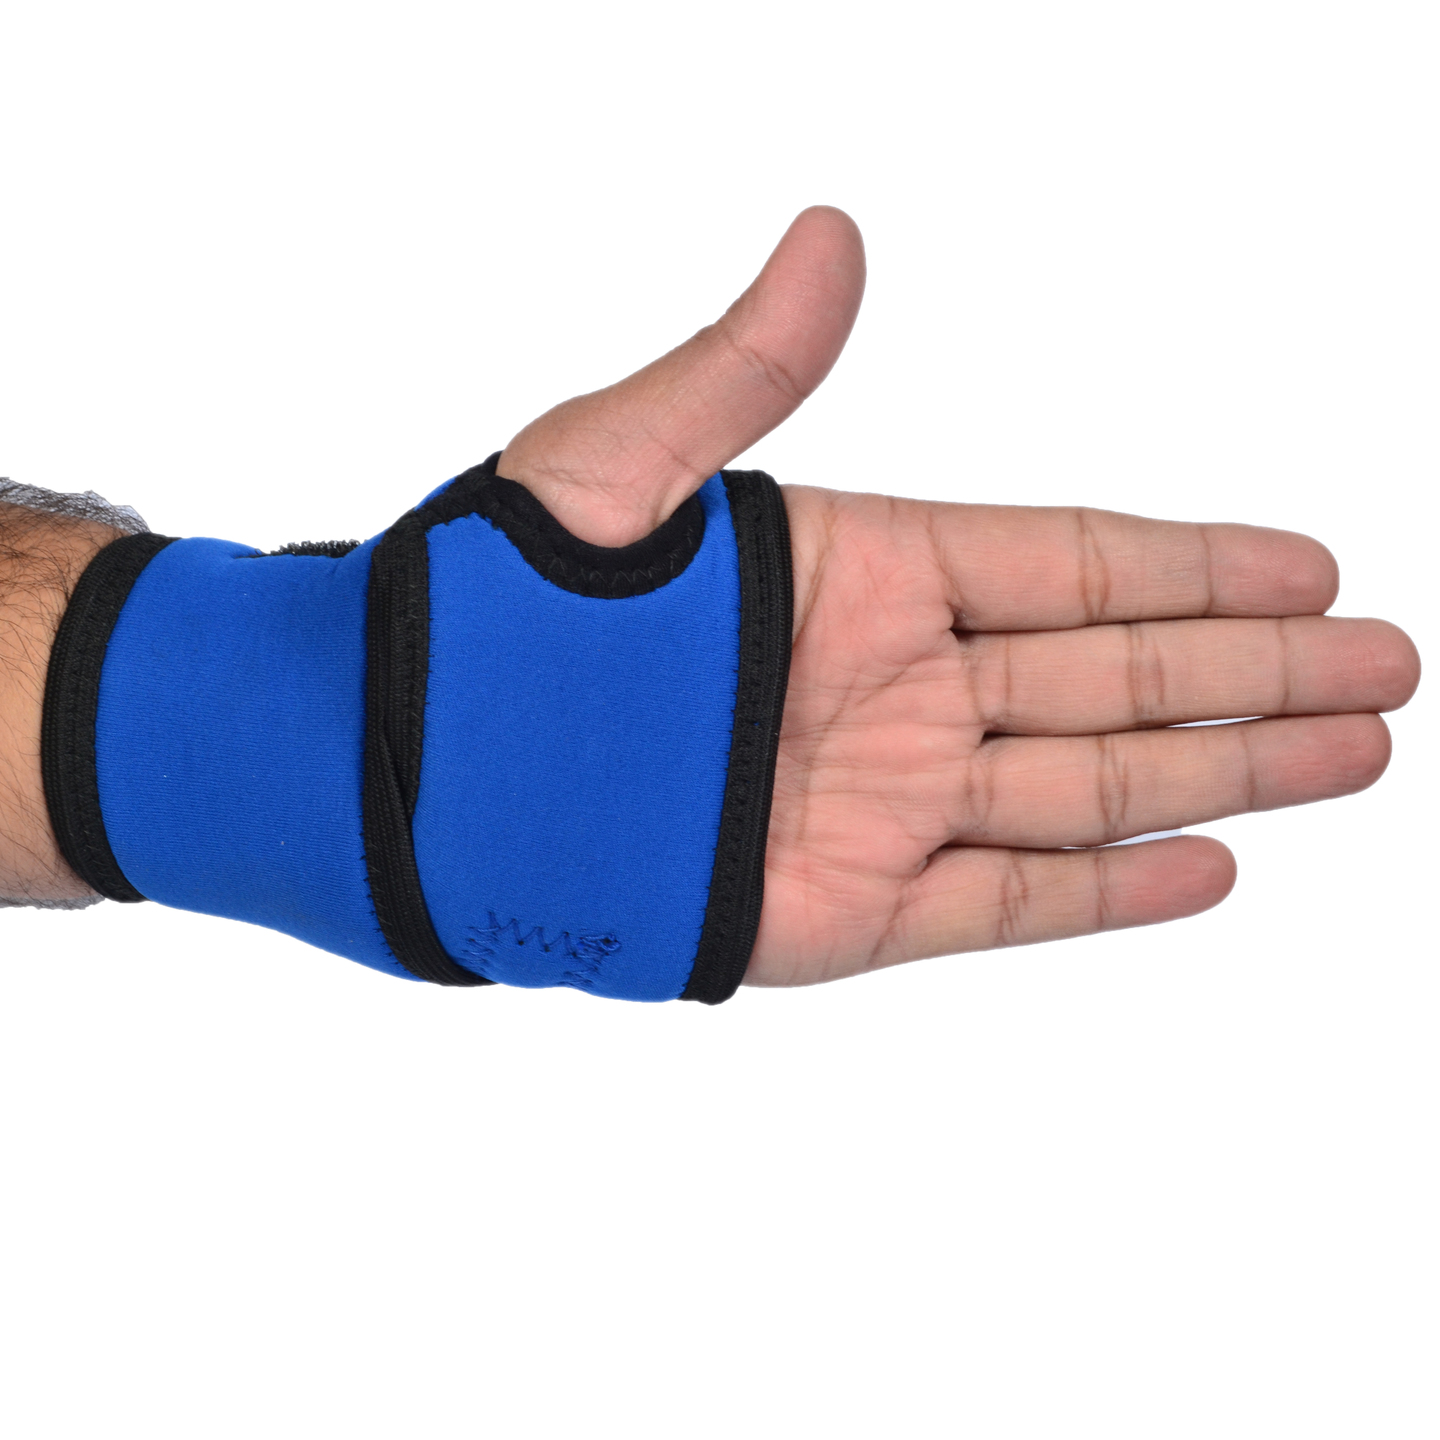 Vkare Wrist Binder with Thumb Support - Blue - Neoprene